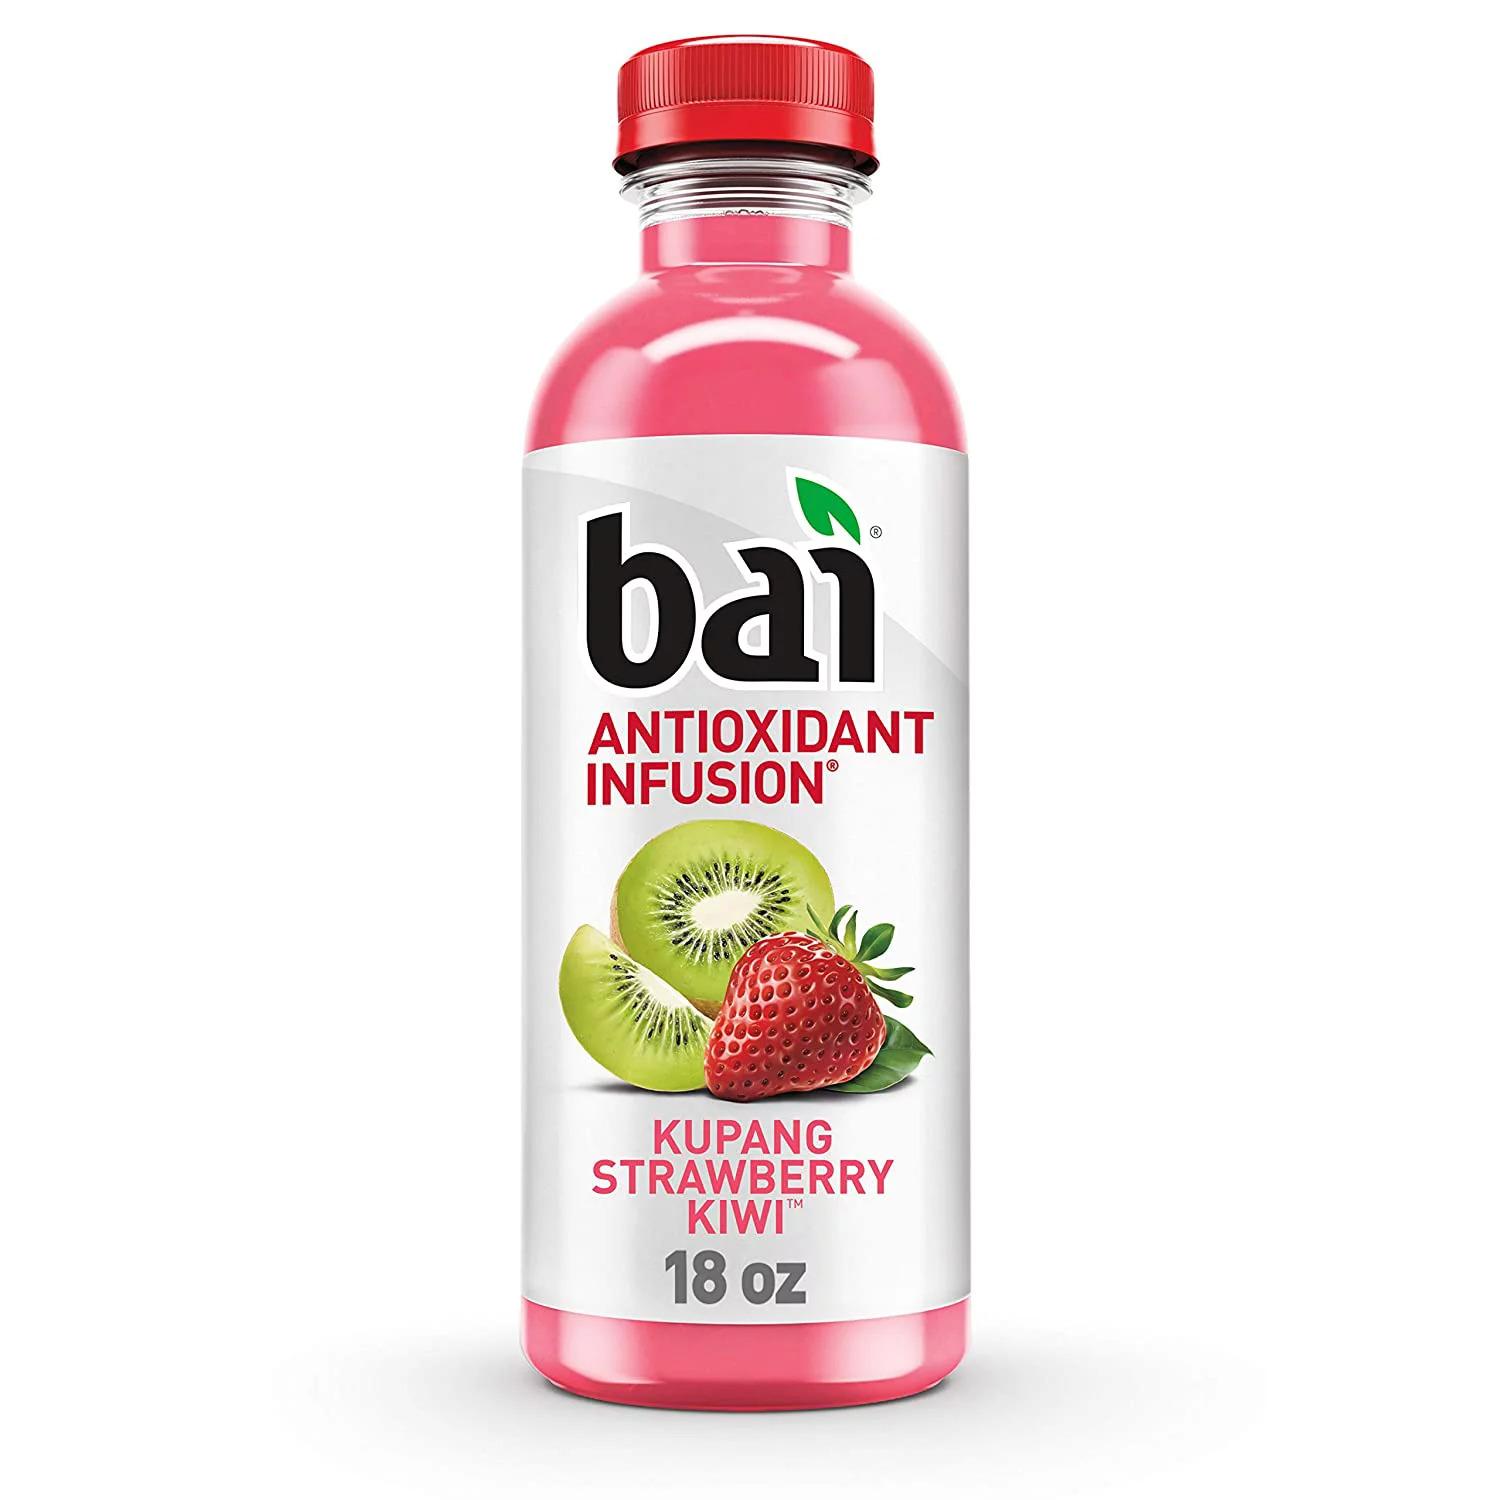 Free Bai Antioxidant Drink at Big Lots for Big Lots Reward Members